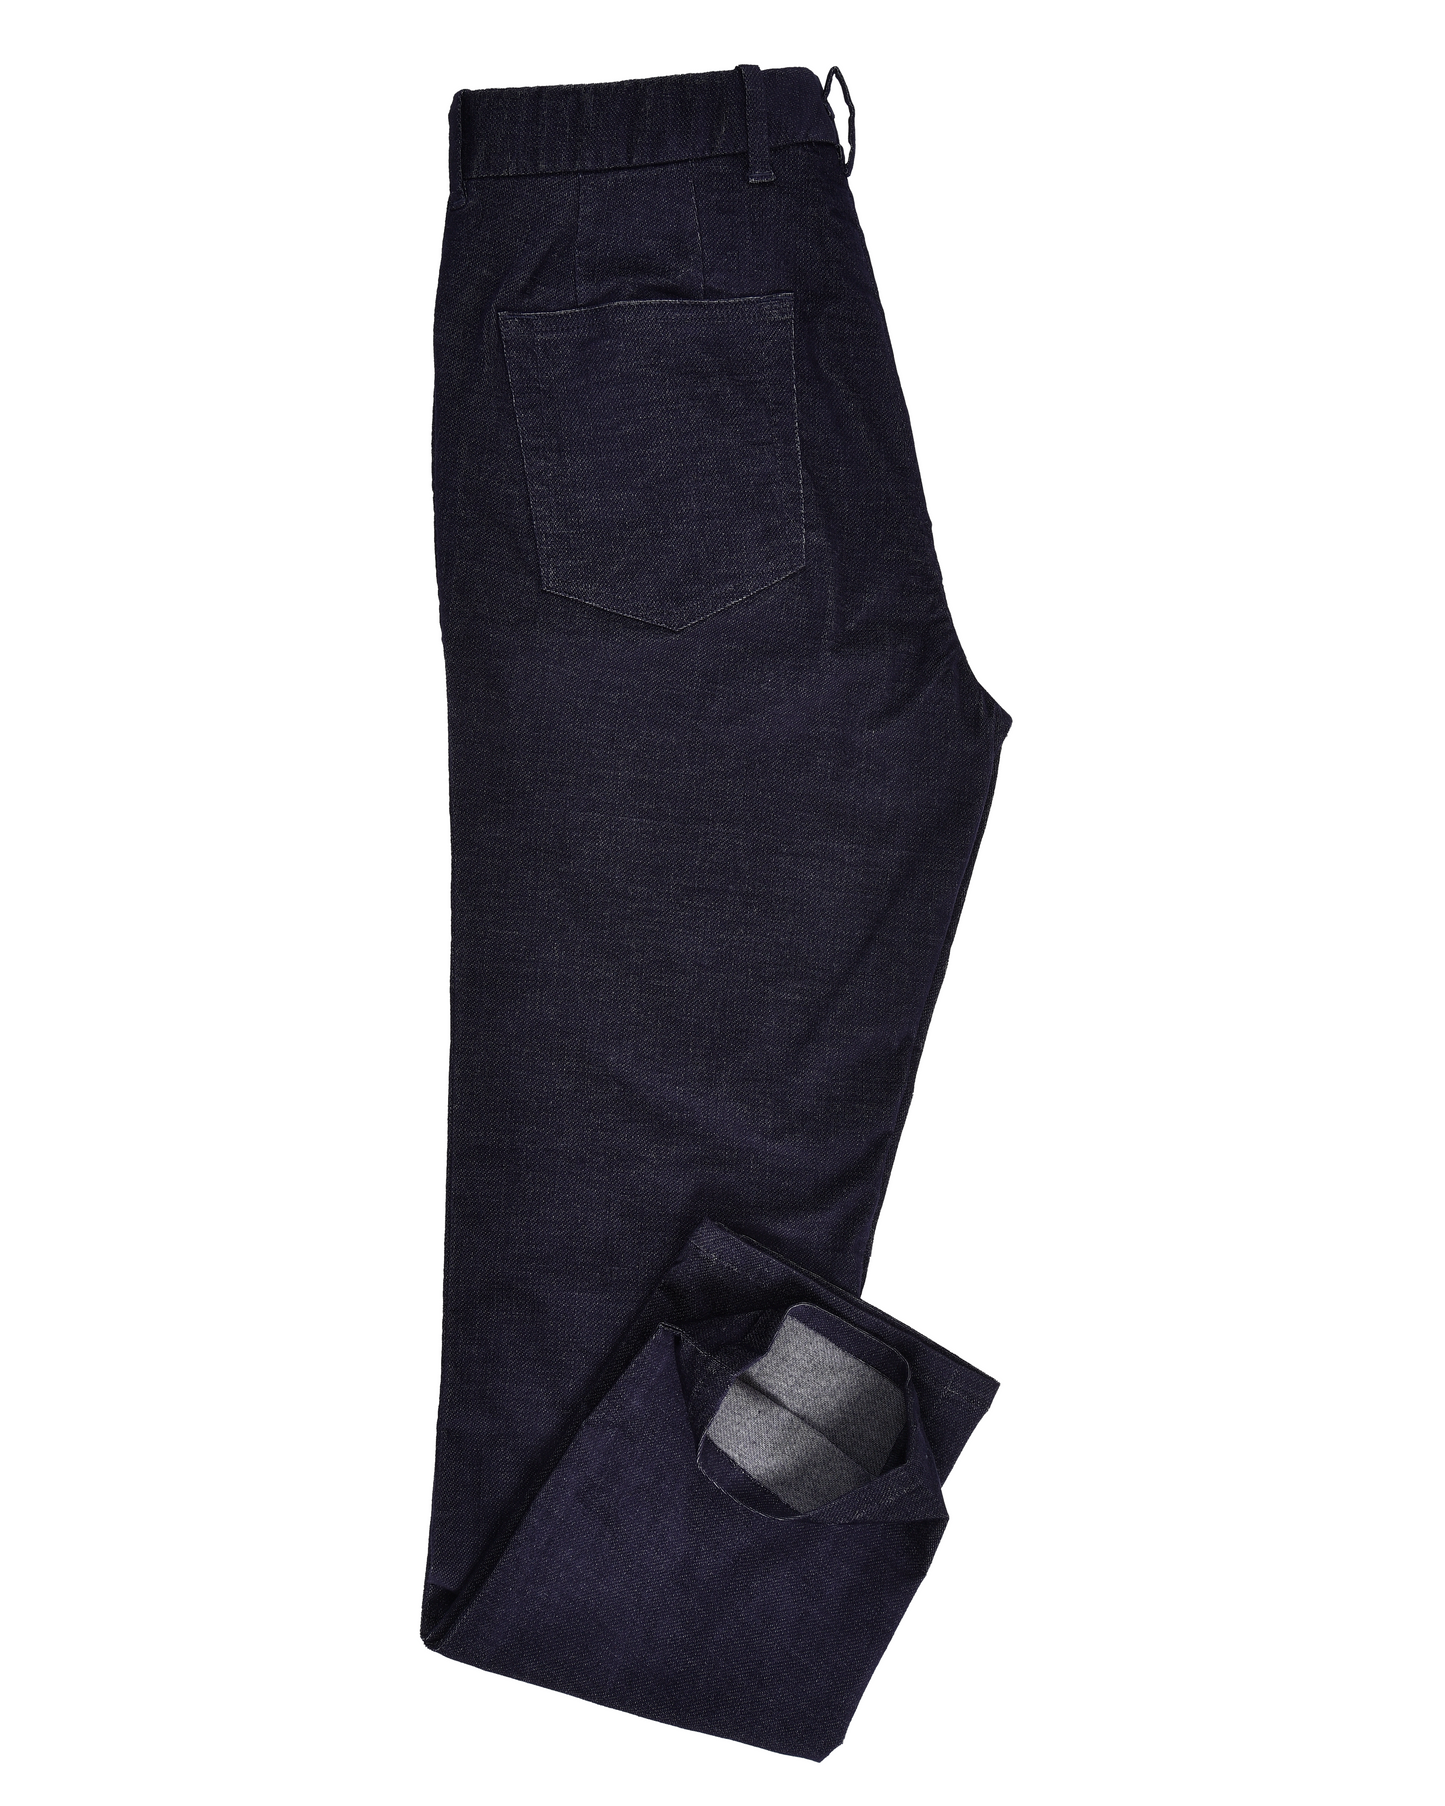 Indigo 4-Way Stretchable Jeans